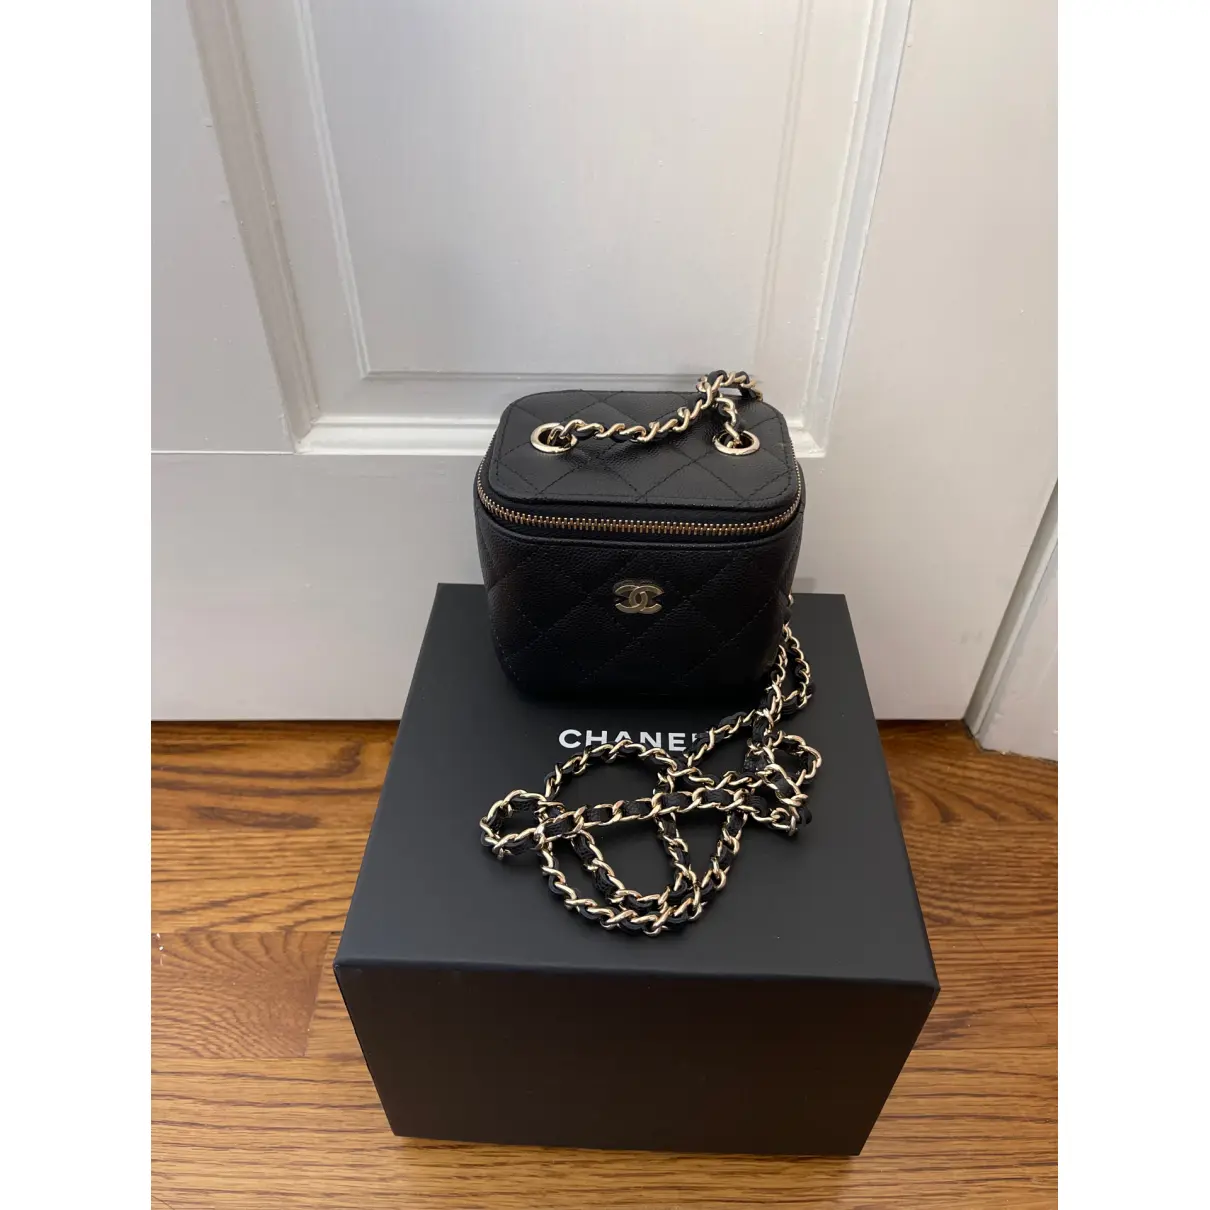 Buy Chanel Vanity leather handbag online